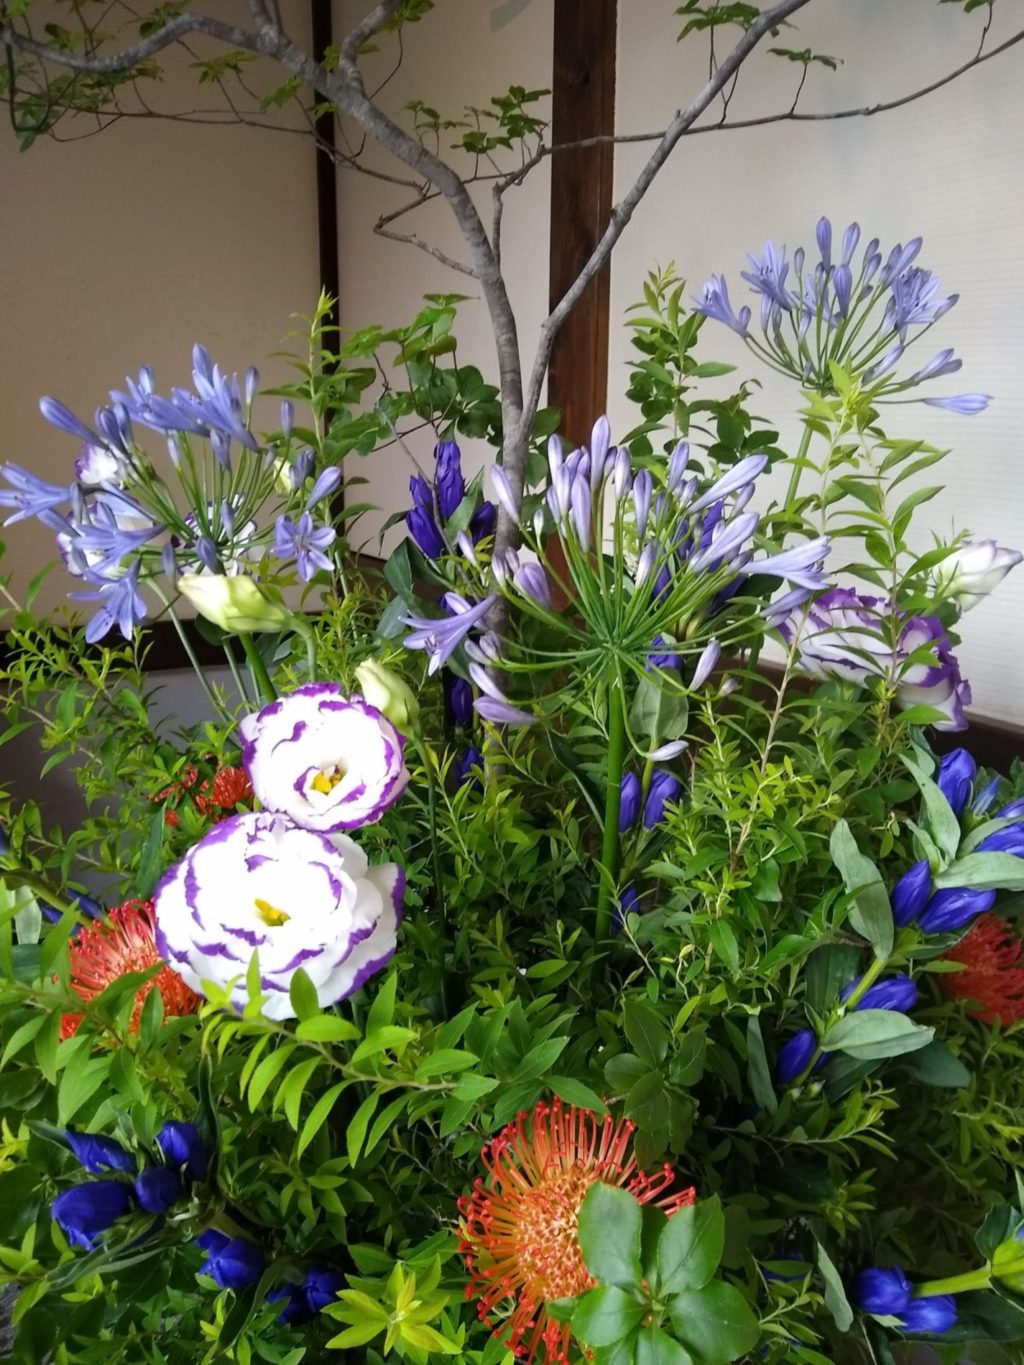 Tpoに応じた花材選び 夏の涼しさを演出する フラワーショップ アリス